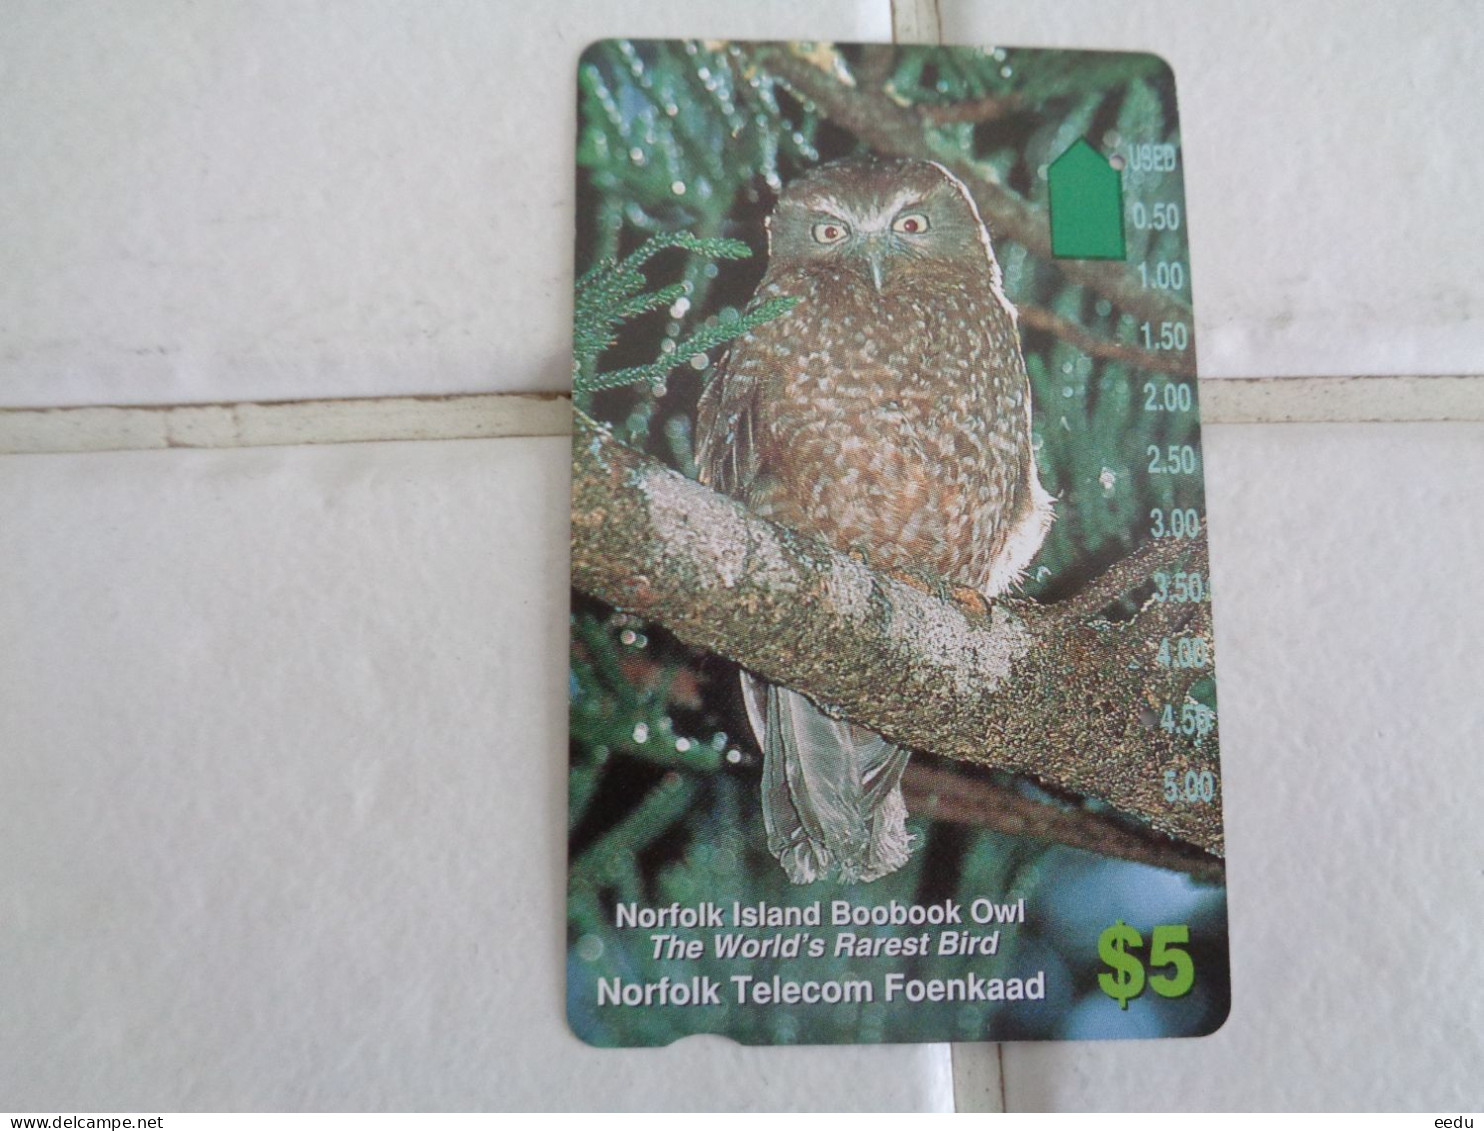 Norfolk Island Phonecard - Ile Norfolk